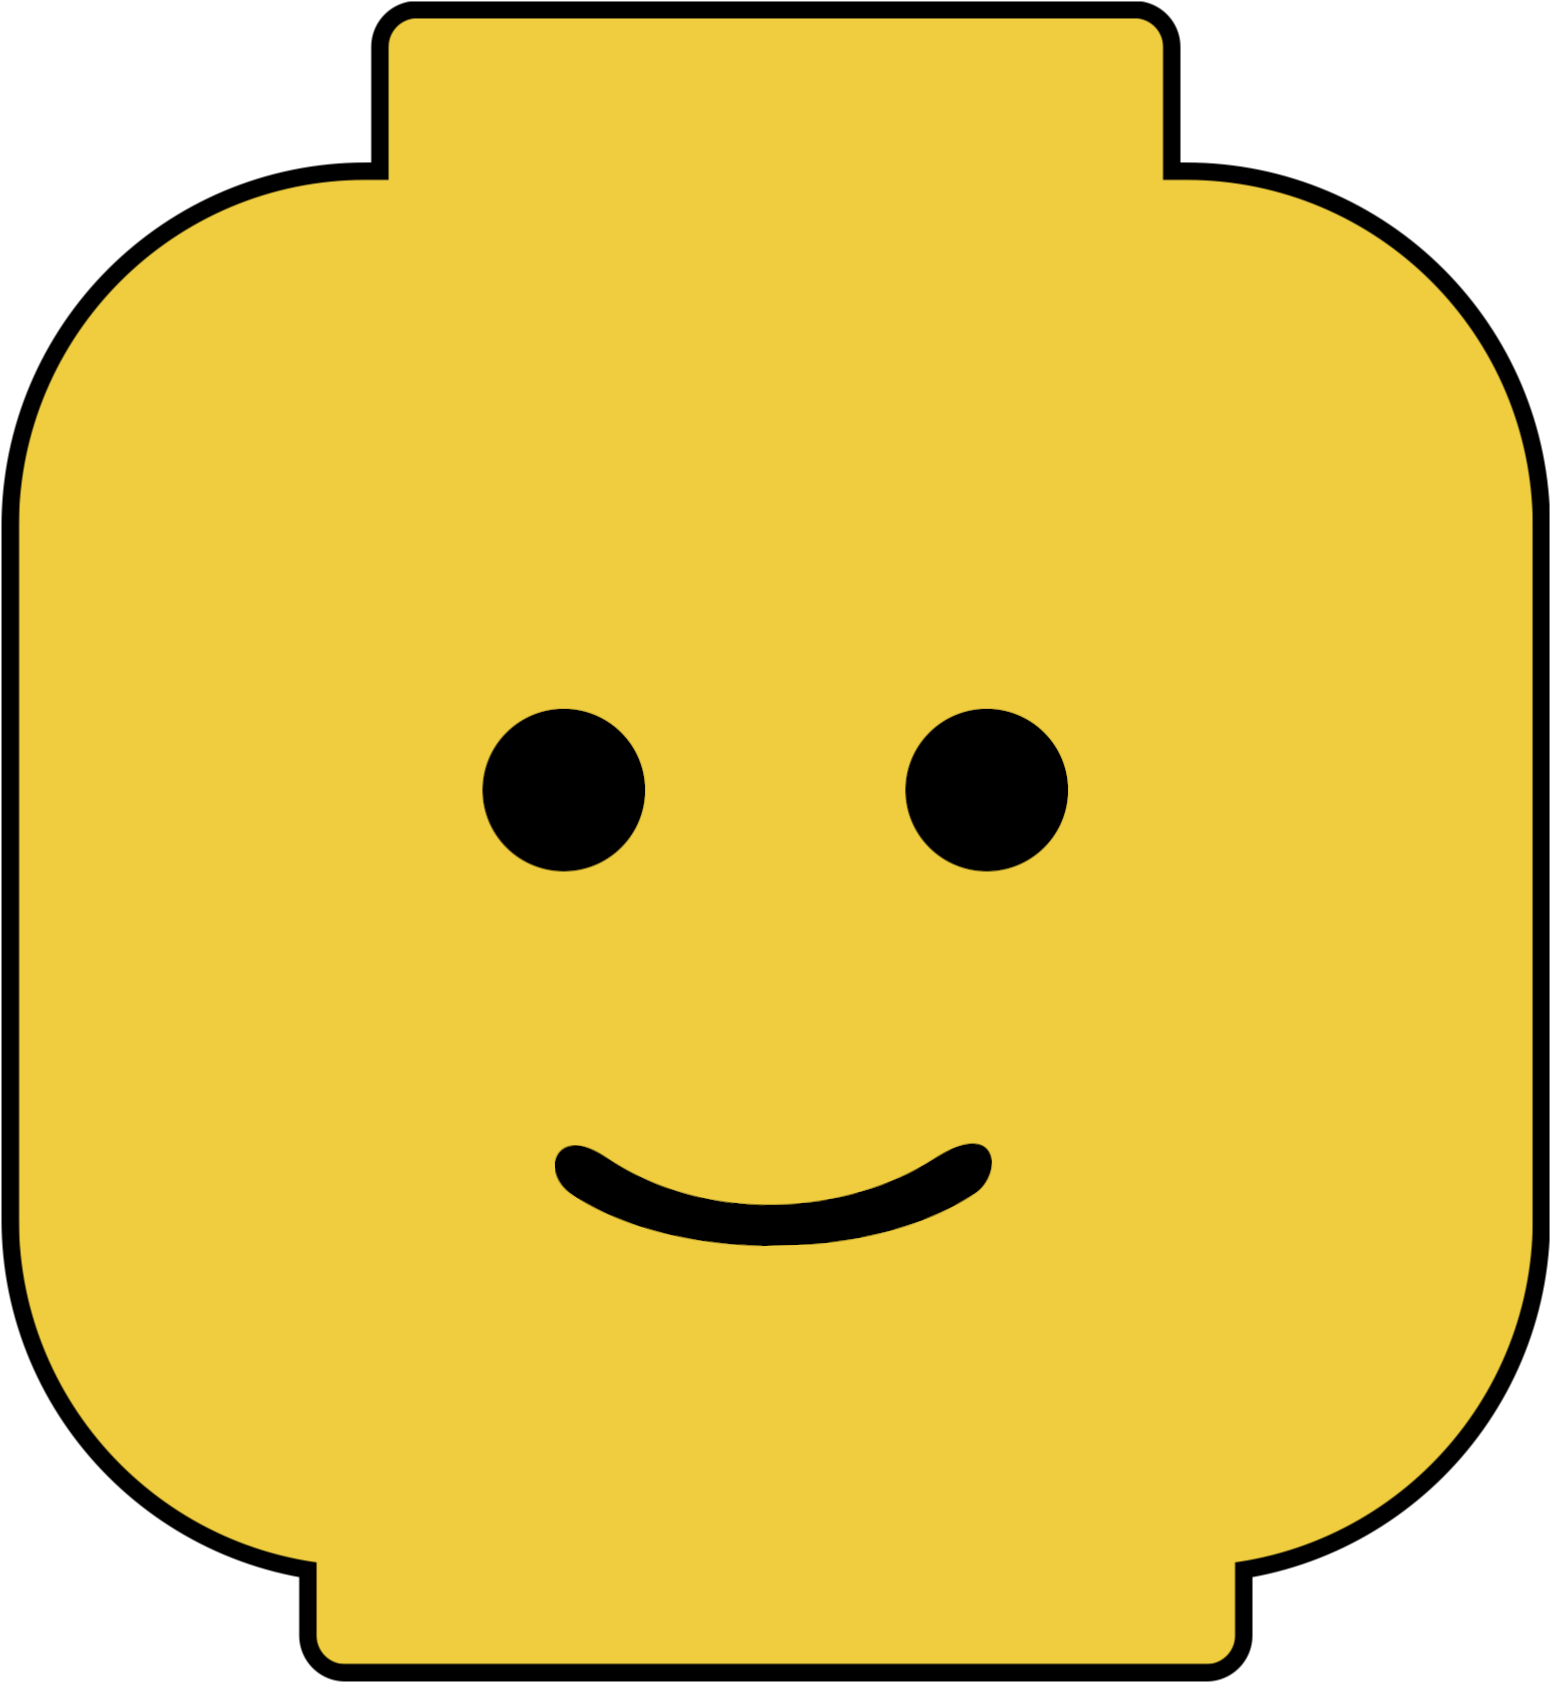 Lego Head 1 1,736×1,736 Pixels - Lego Minifigures Face Printable (1736x1736)